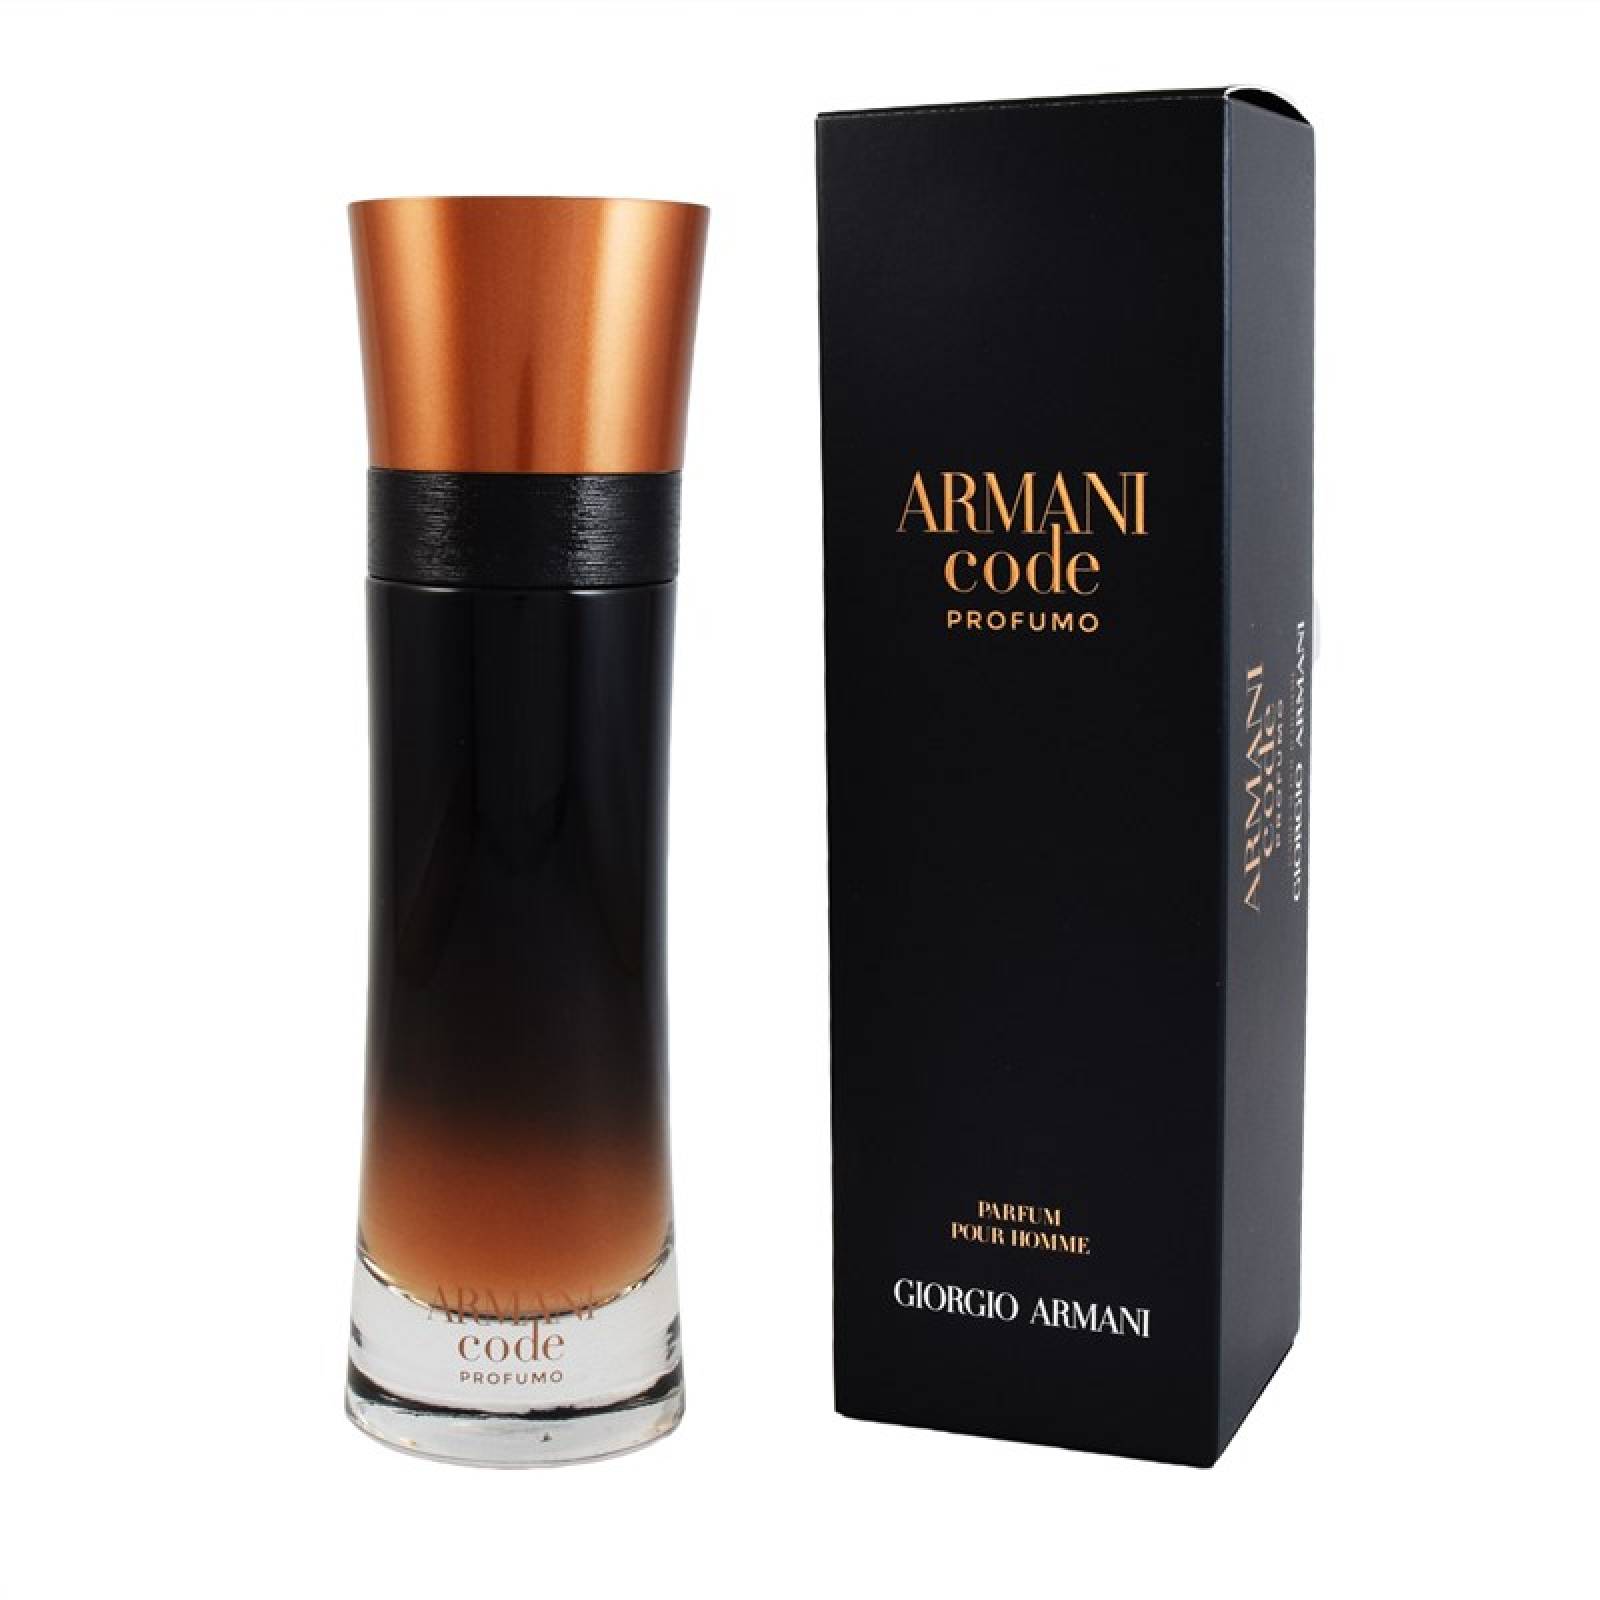 Armani Code Profumo 110 Ml Eau De Parfum Spray De Giorgio Armani de Caballero